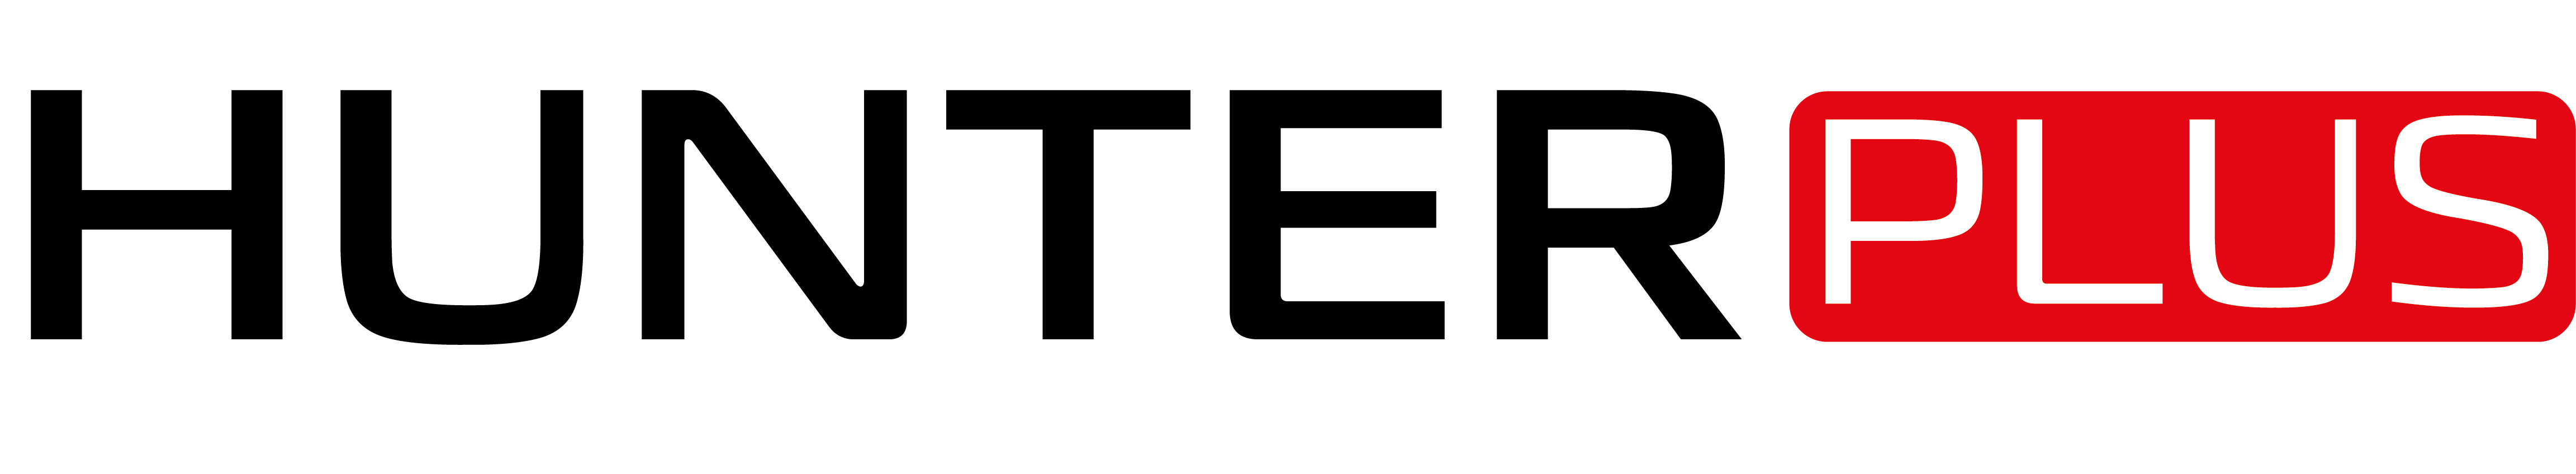 Логотип Changan CS35Plus